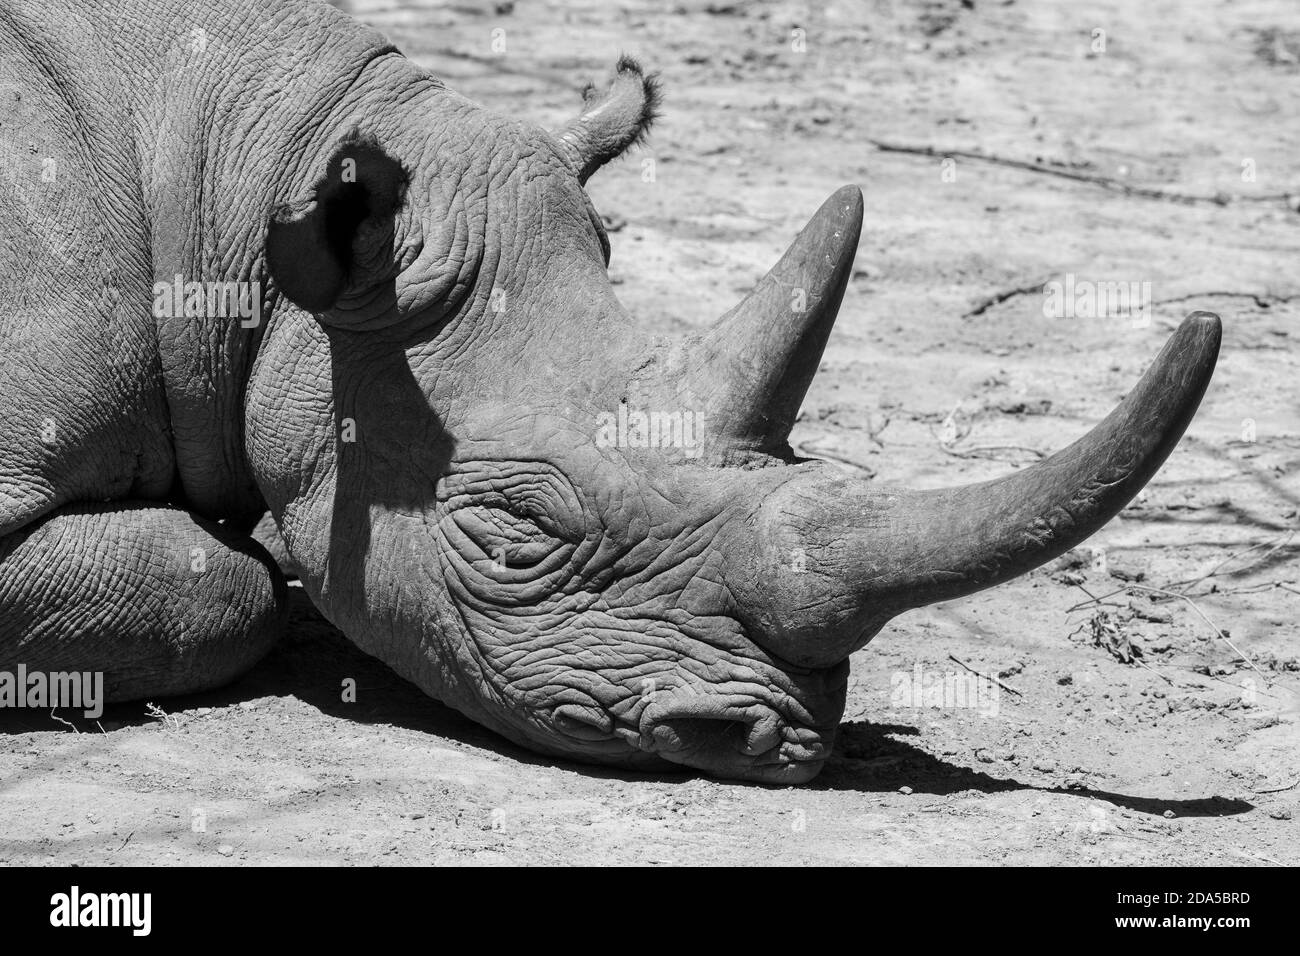 Africa, Kenya, Ol Pejeta Conservancy. Rinoceronte nero (SELVATICO: Diceros bicornis) aka specie a gancio, criticamente minacciata. Dettaglio testa B&N. Foto Stock